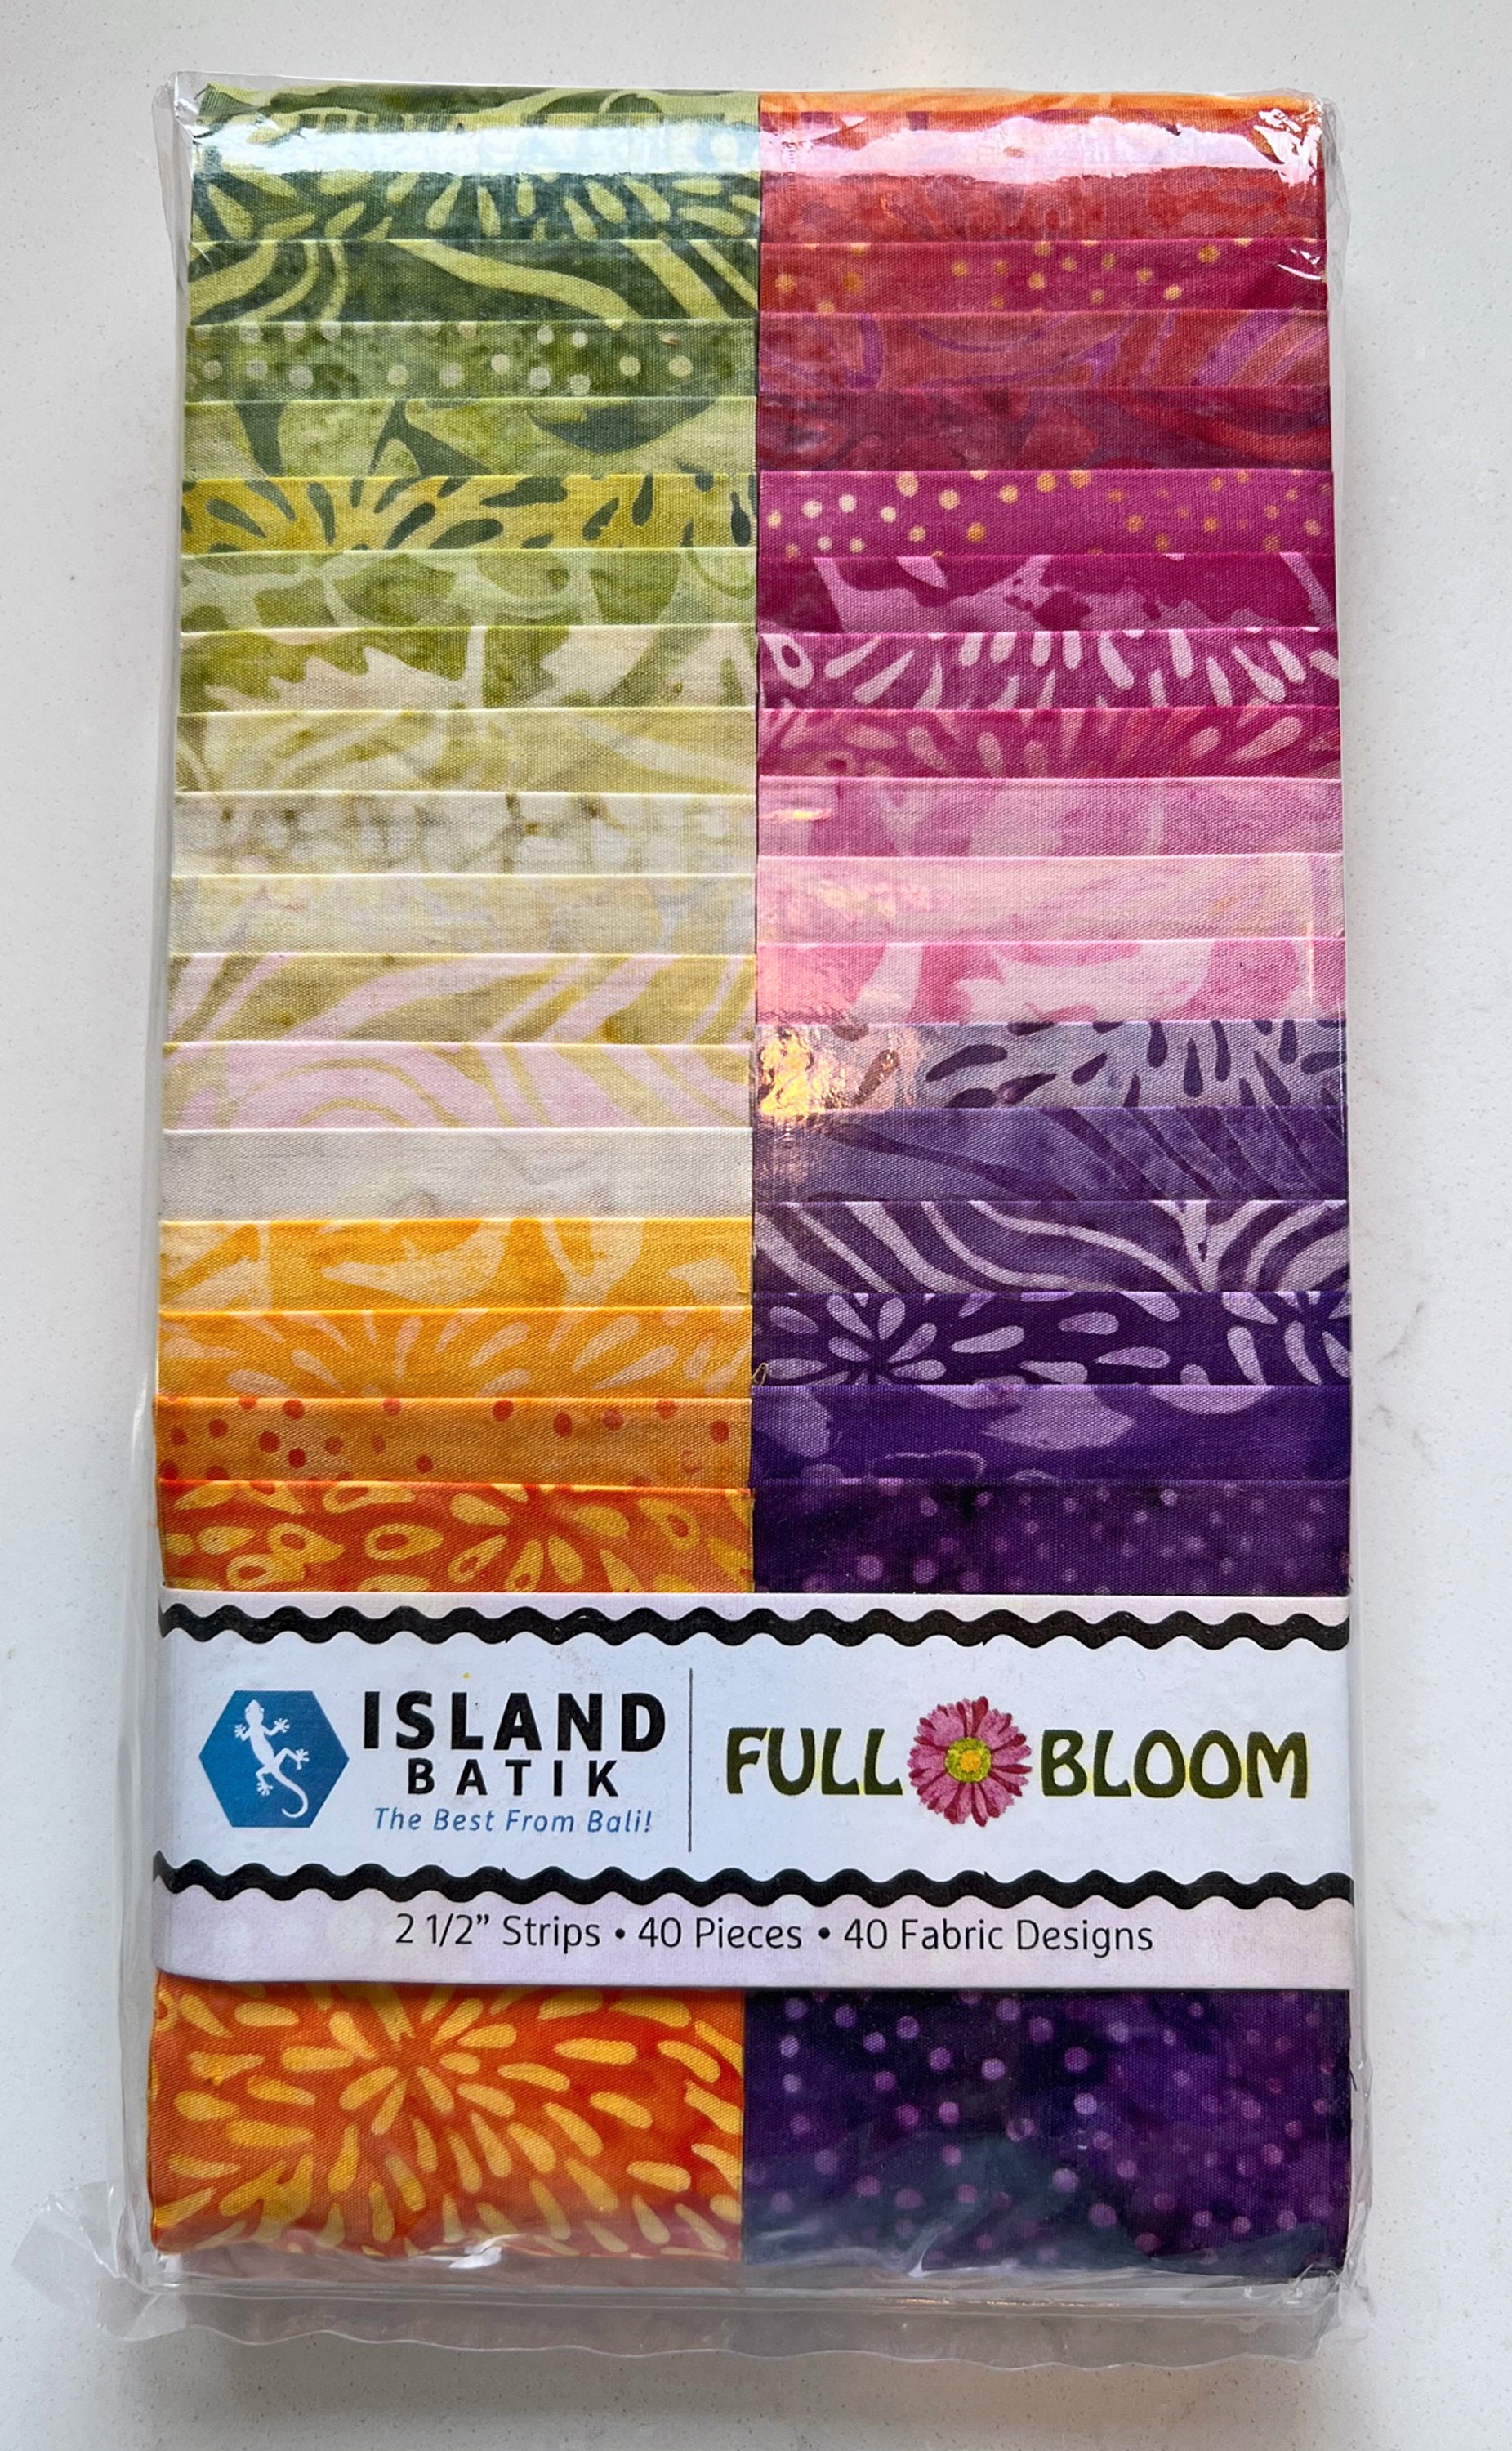 2976-002 Malam Batiks IV - Floppy Floral - Blue Batik Fabric